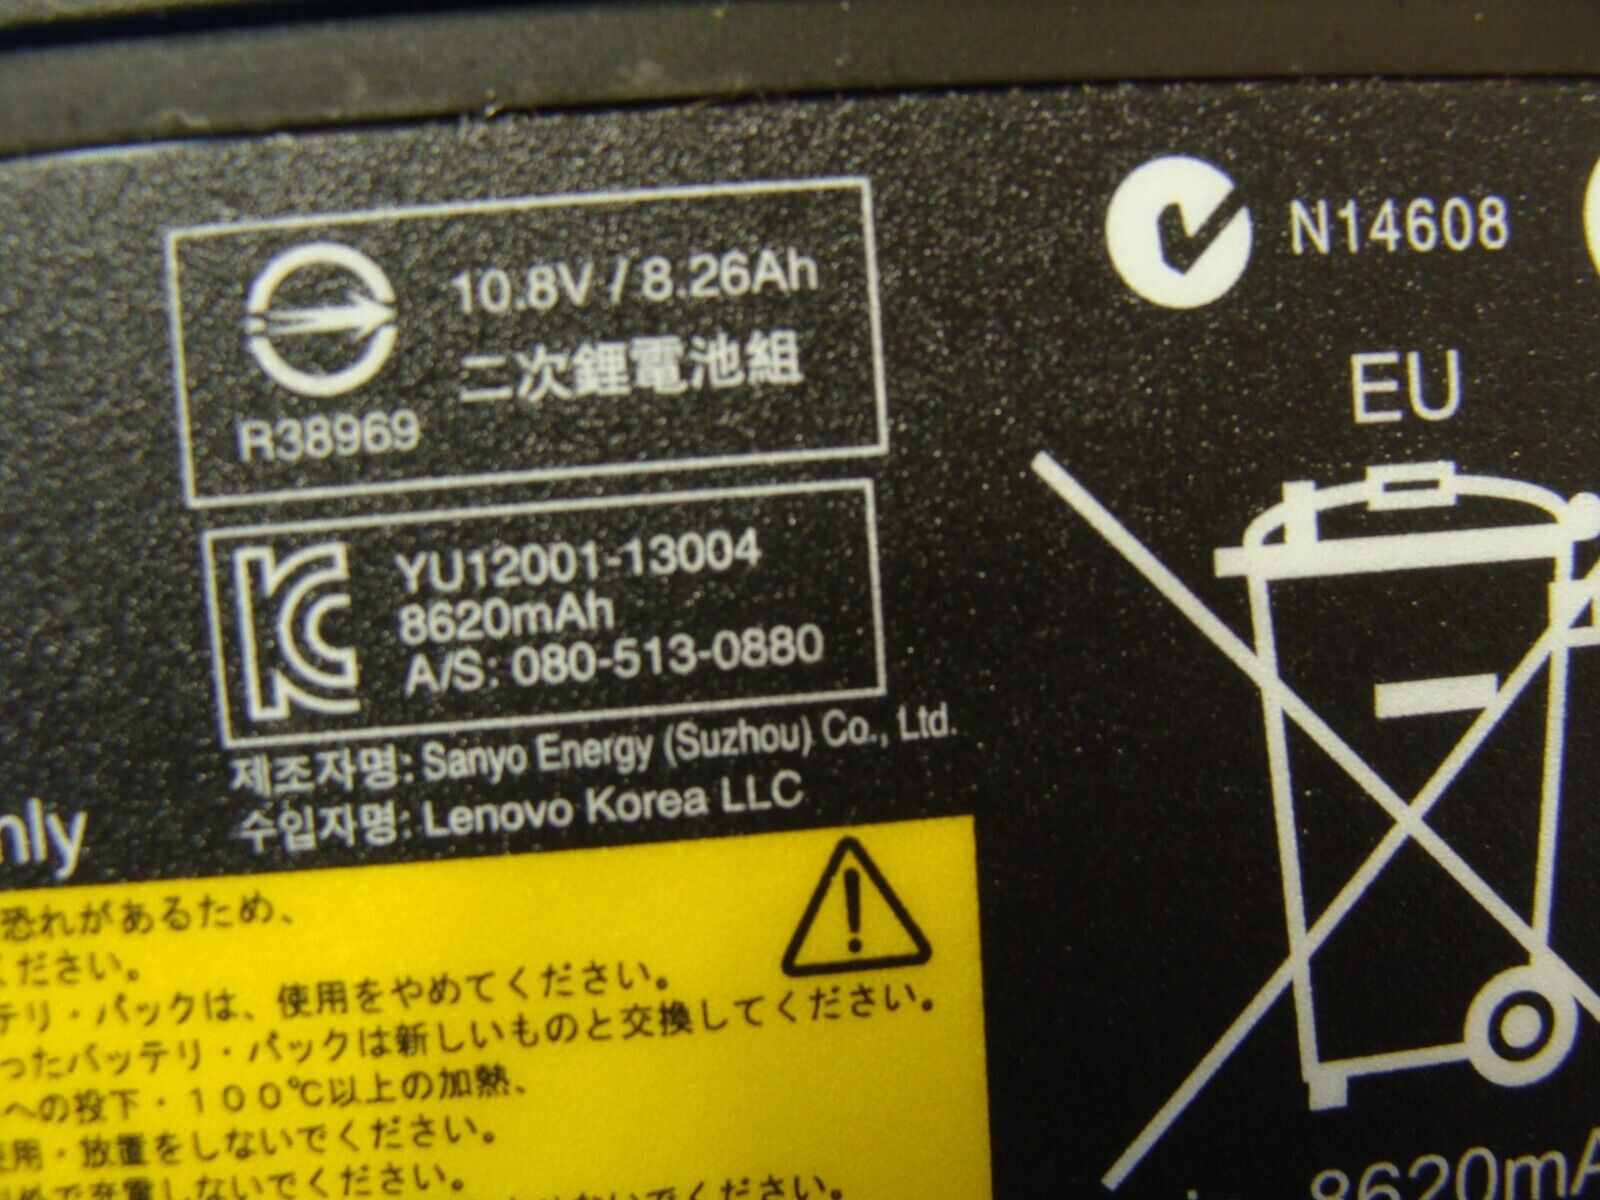 Lenovo ThinkPad 15.6” T540P Genuine Battery 10.8V 100Wh 8260mAh 45N1150 45N1779